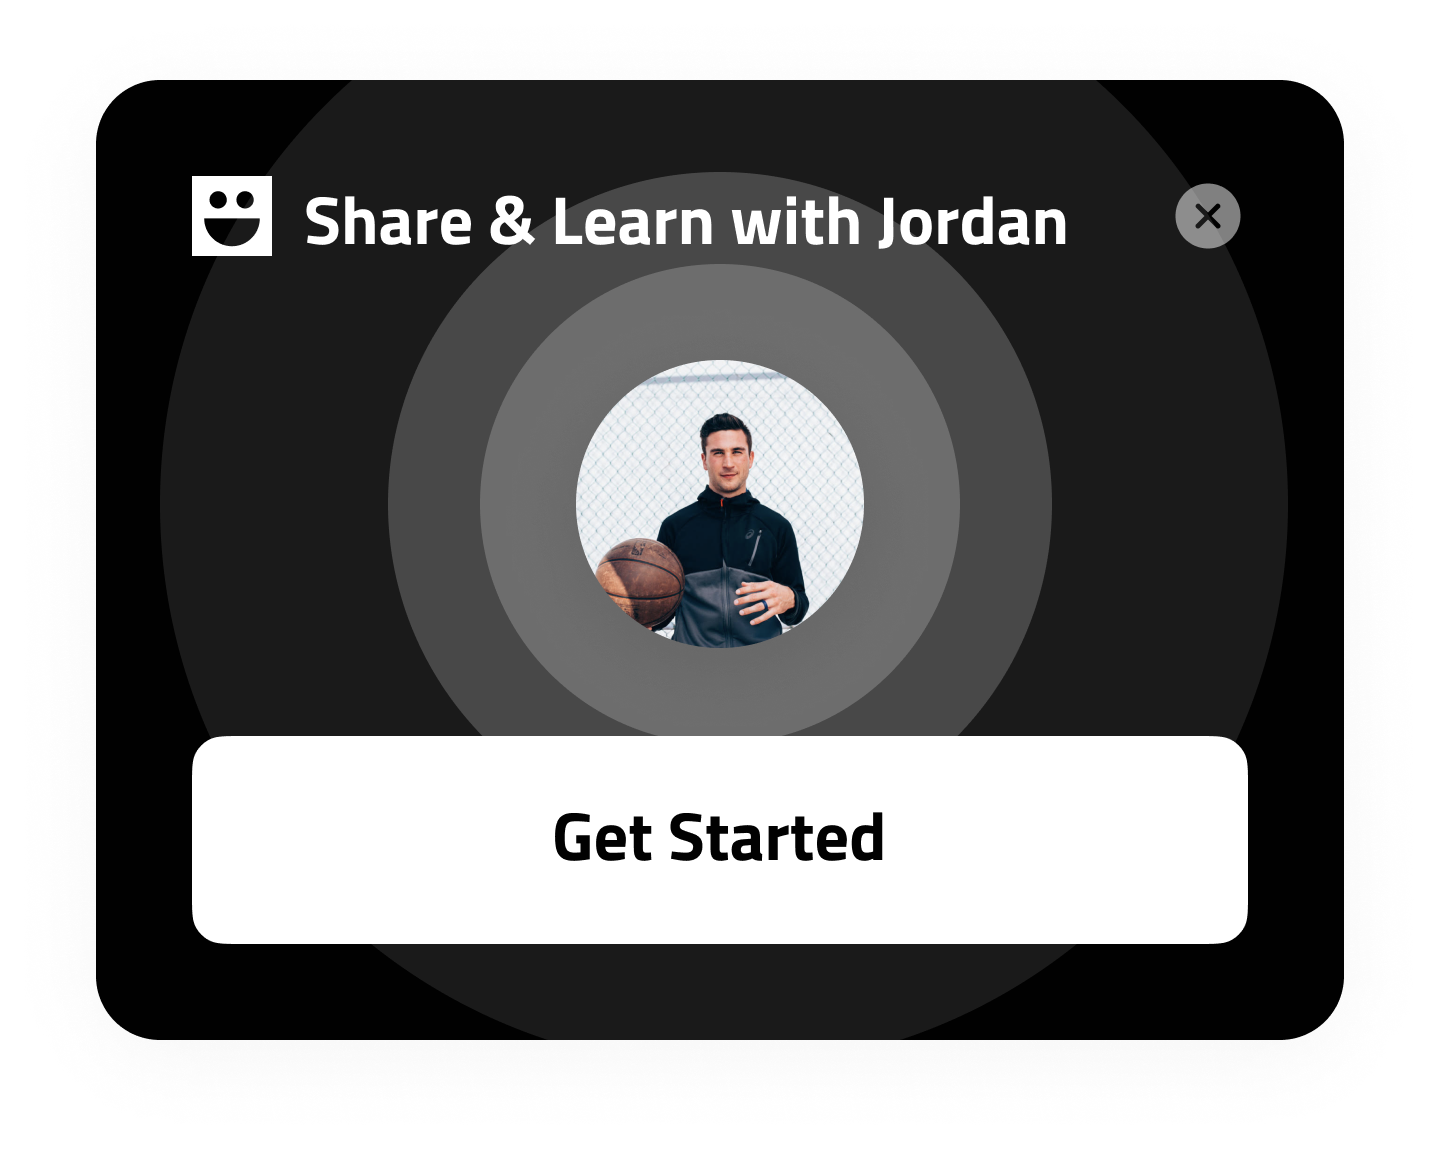 Share & Learn with JOrdan